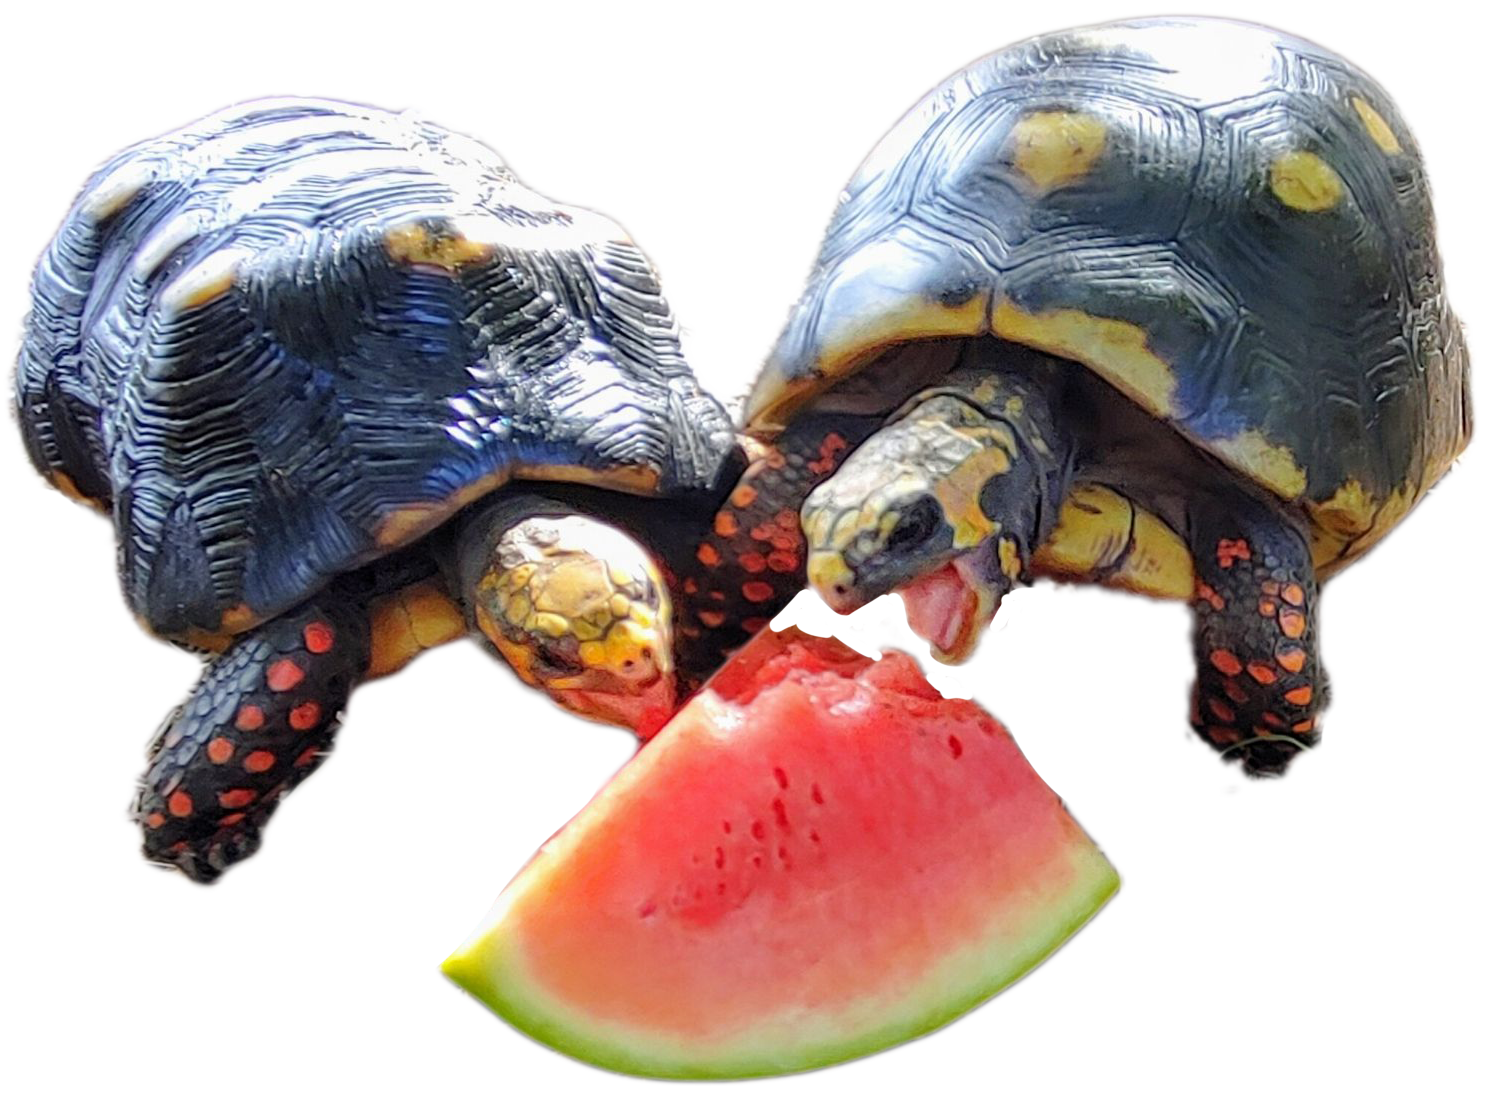 Two tortoises eating watermelon